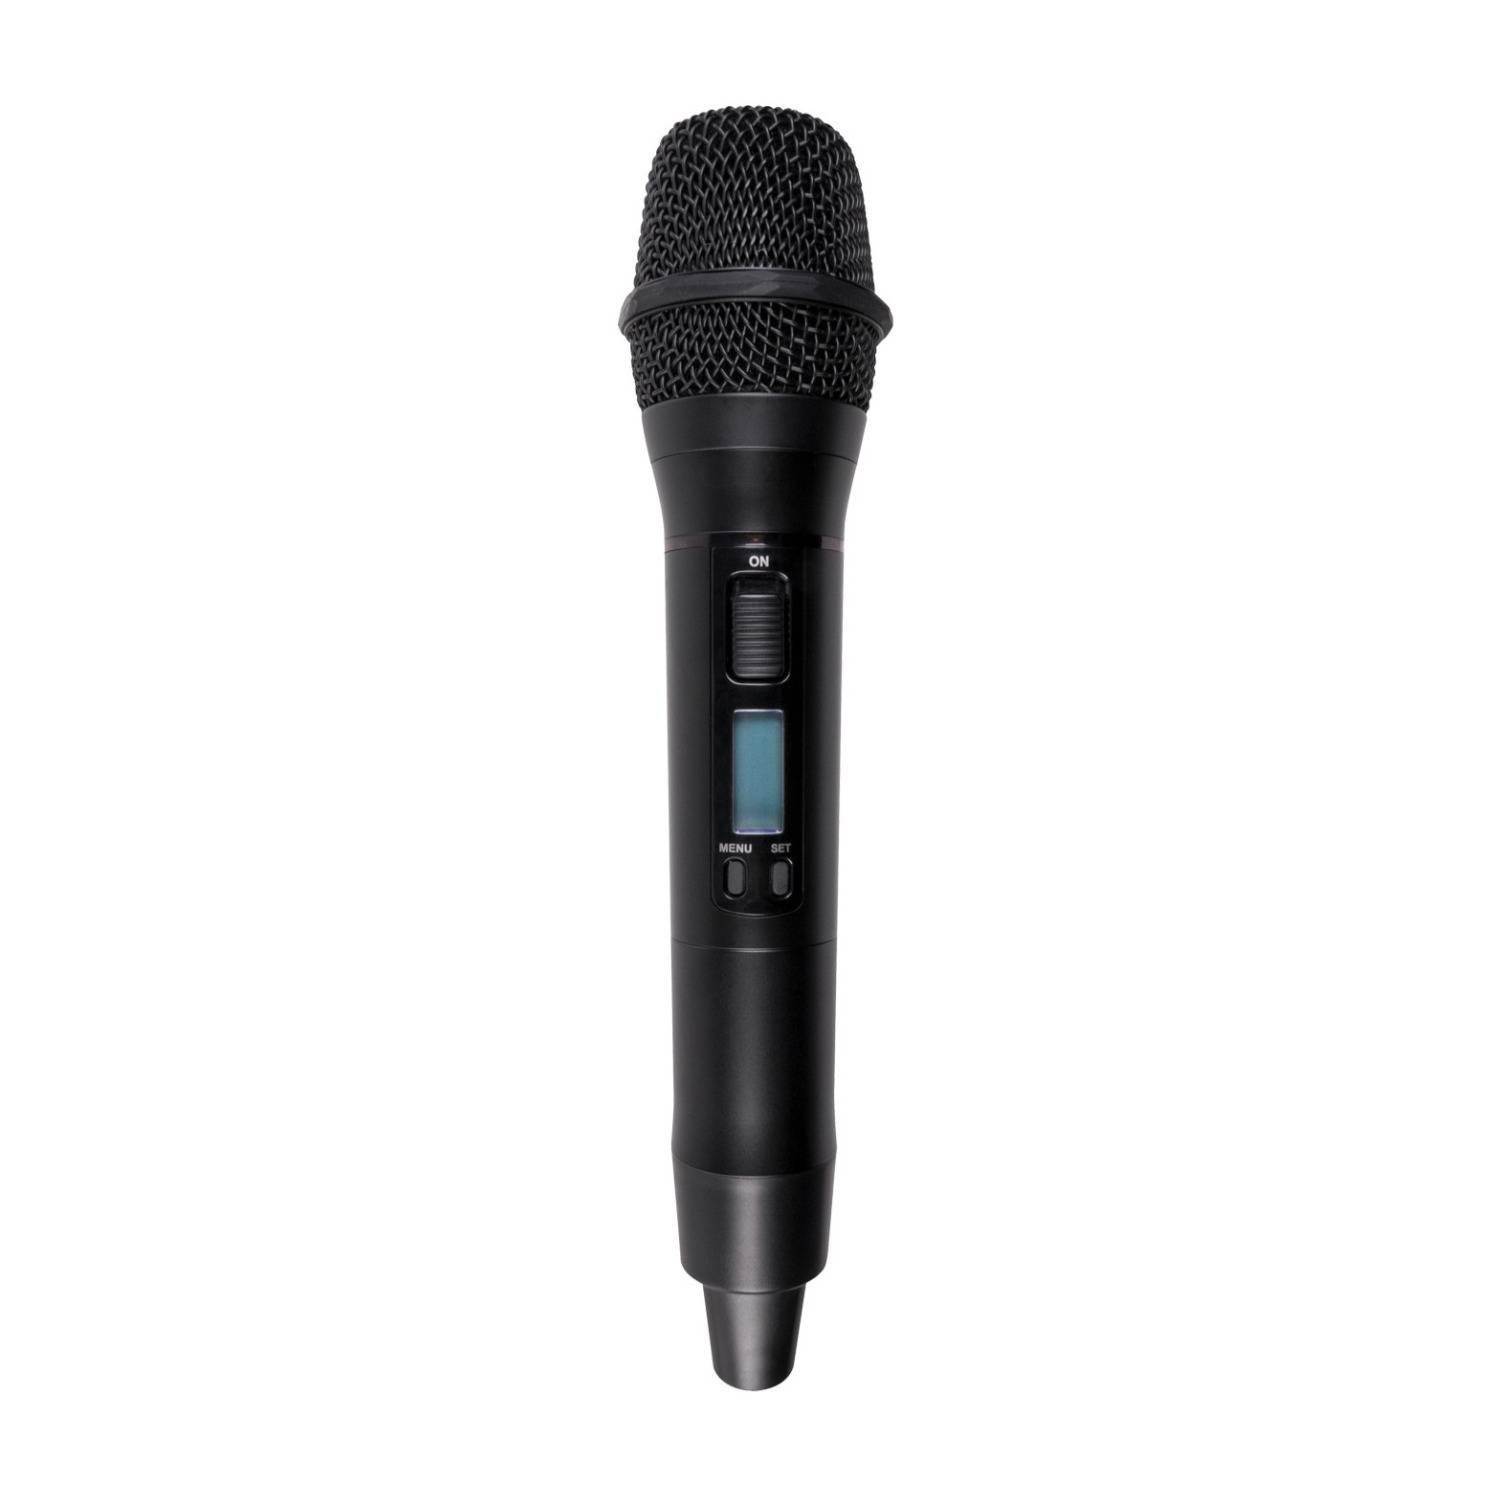 AtlasIED MWHHM Handheld Wireless Microphone (Black)